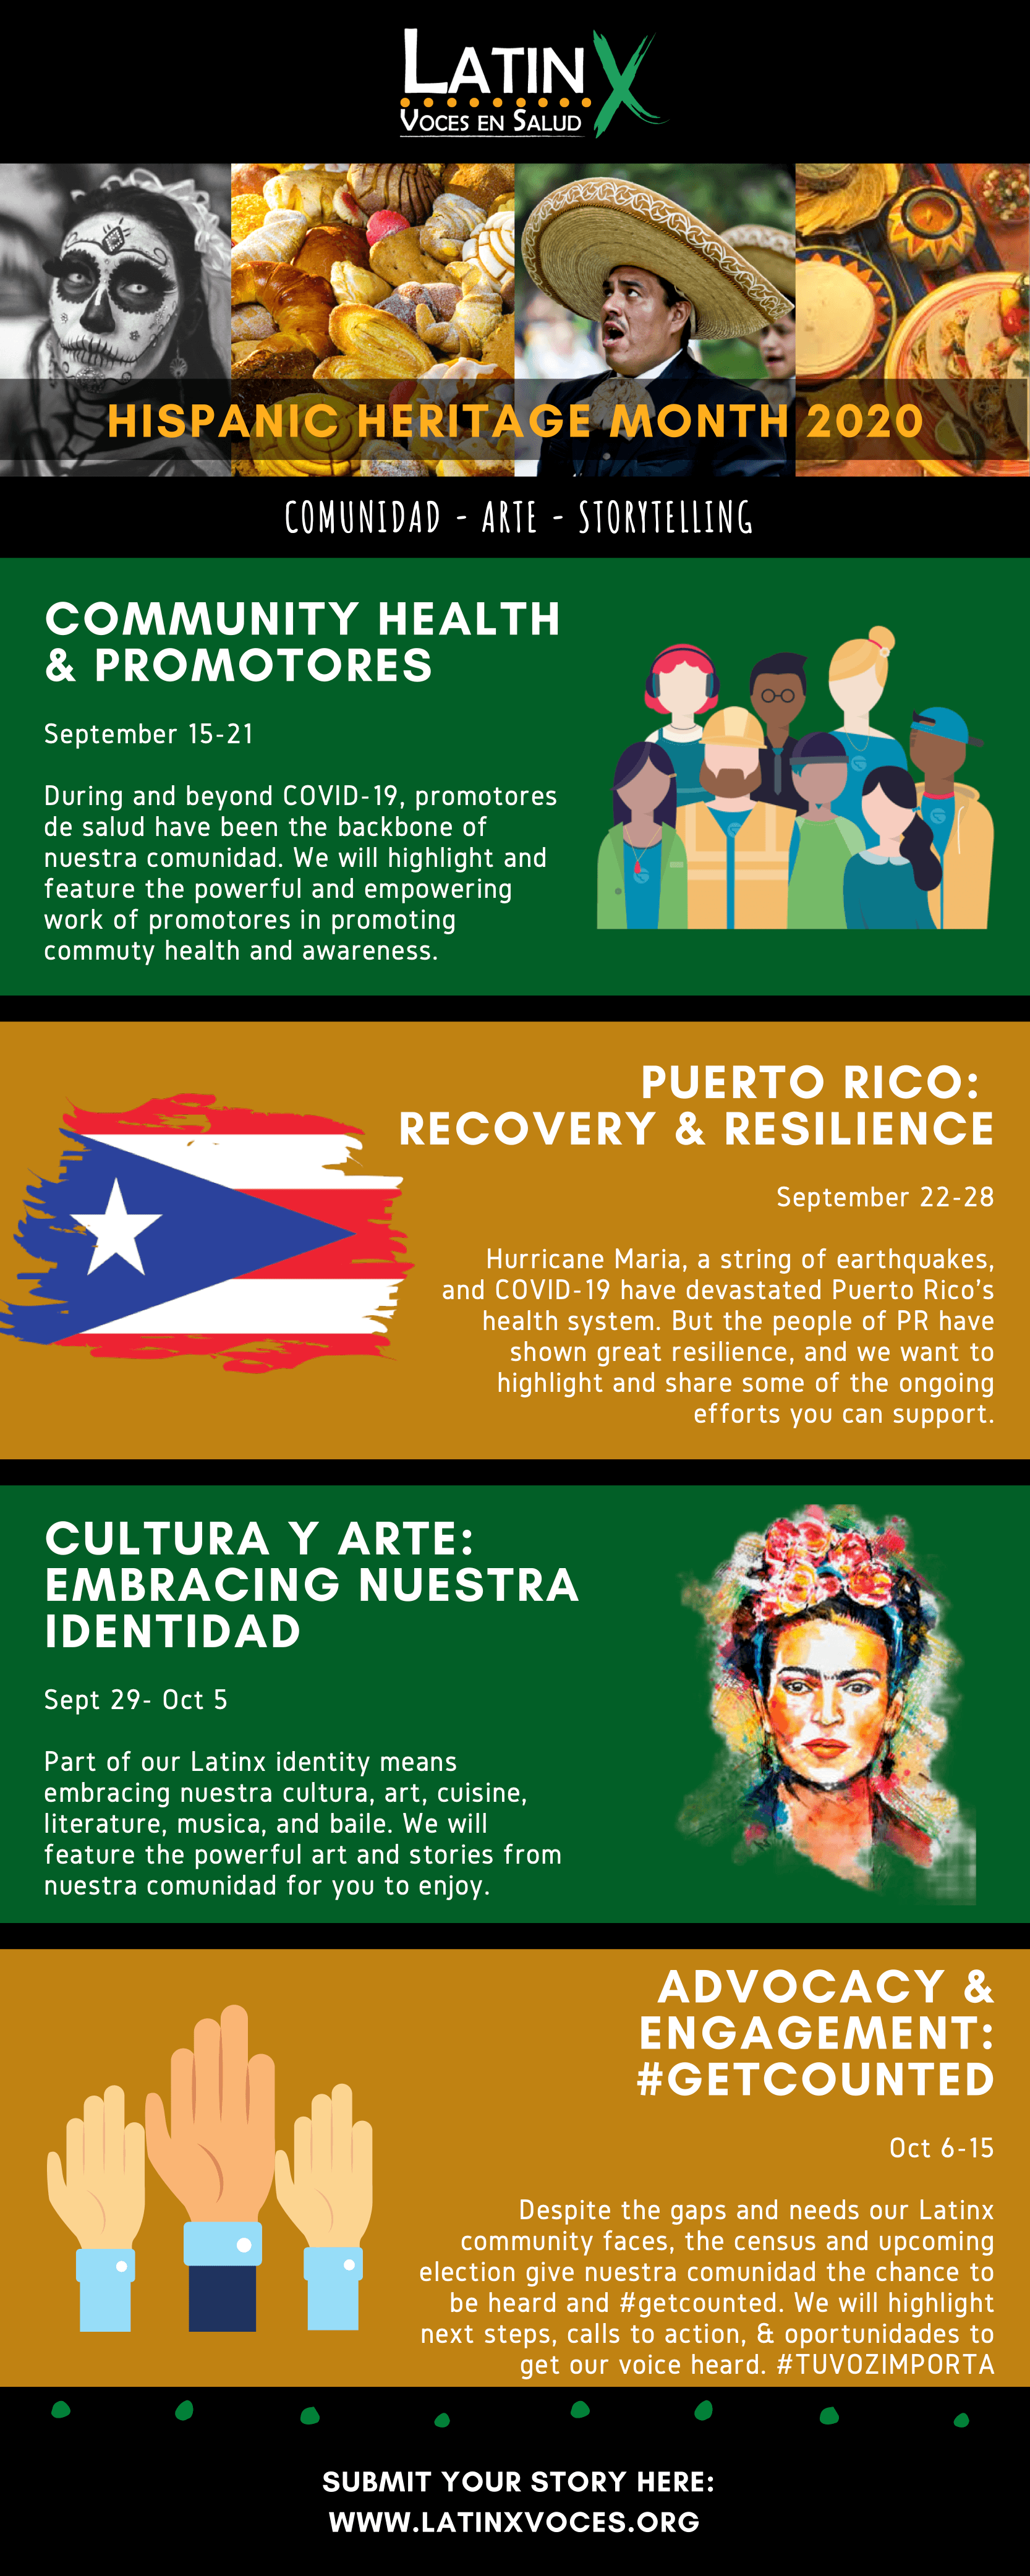 Hispanic Heritage Month 2020